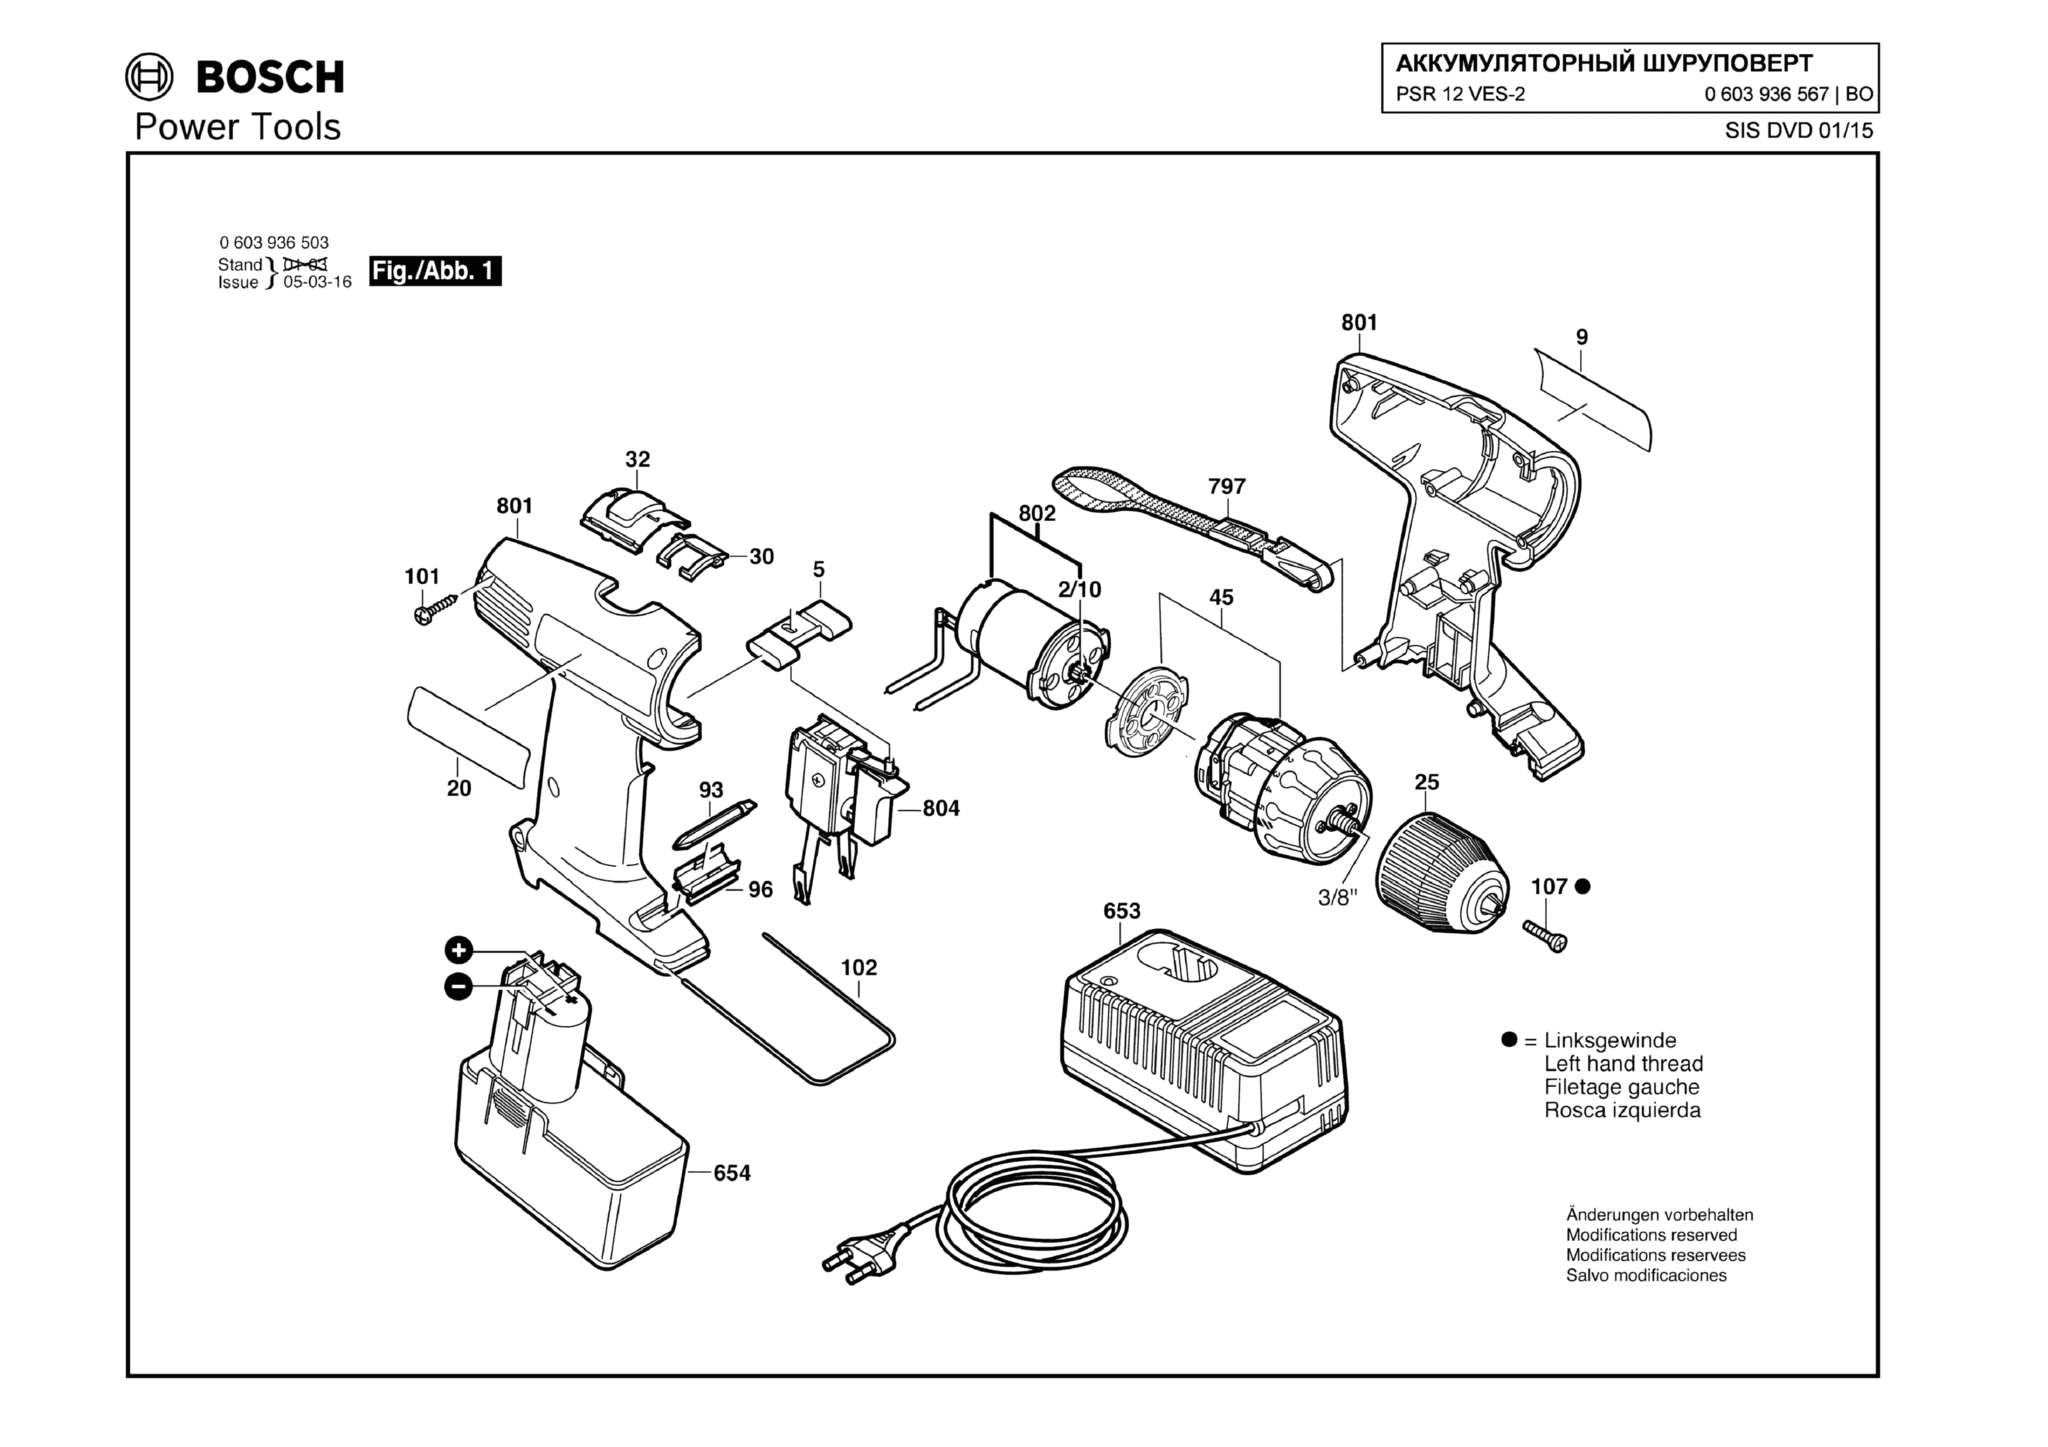 Запчасти, схема и деталировка Bosch PSR 12 VES-2 (ТИП 0603936567)